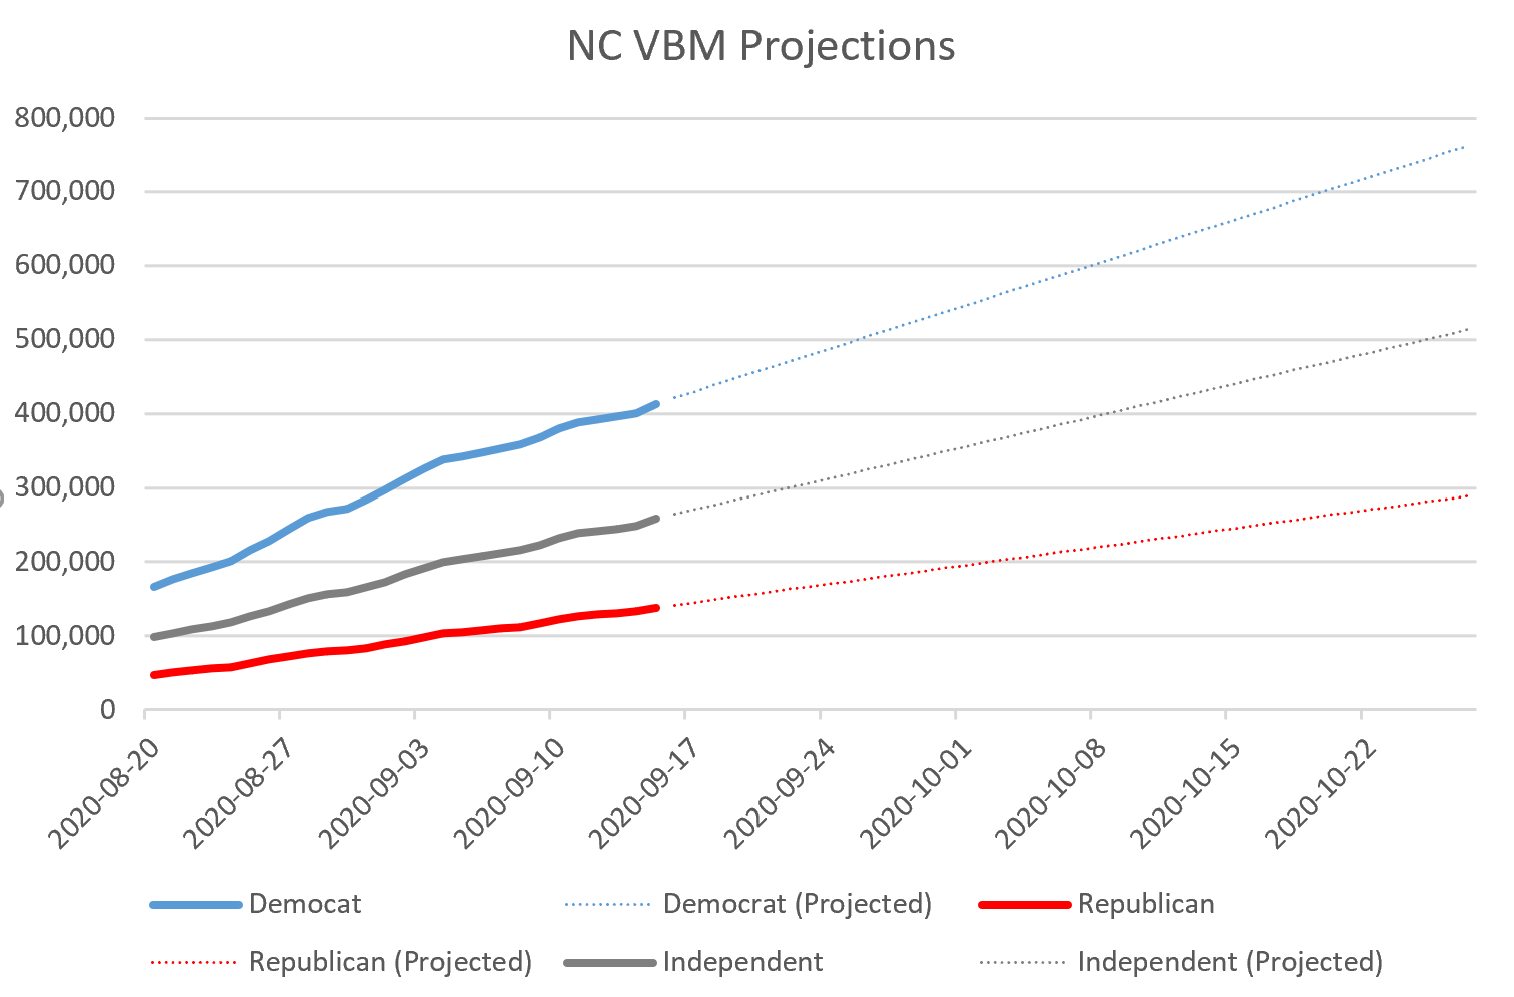 VBM projections